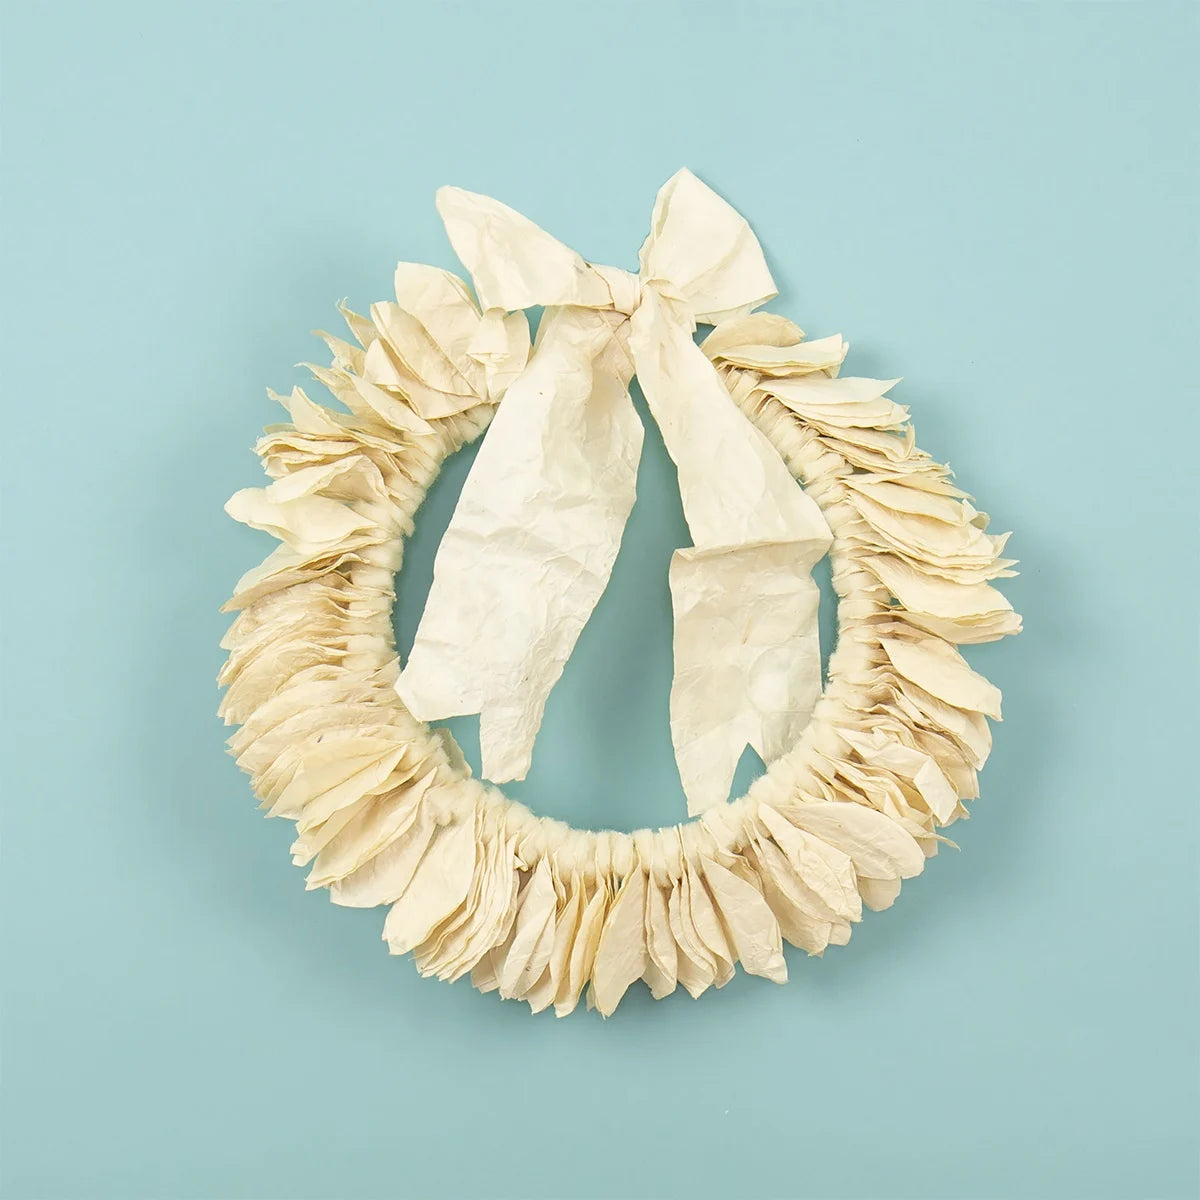 Lokta Paper Wreath - White